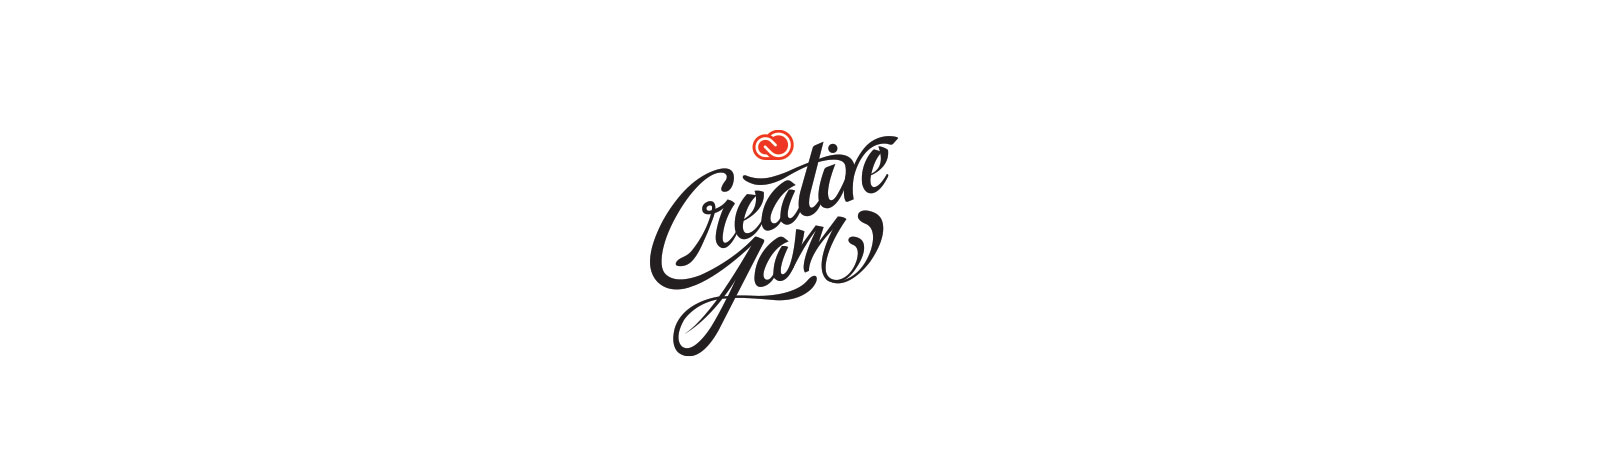 creative jam logo image